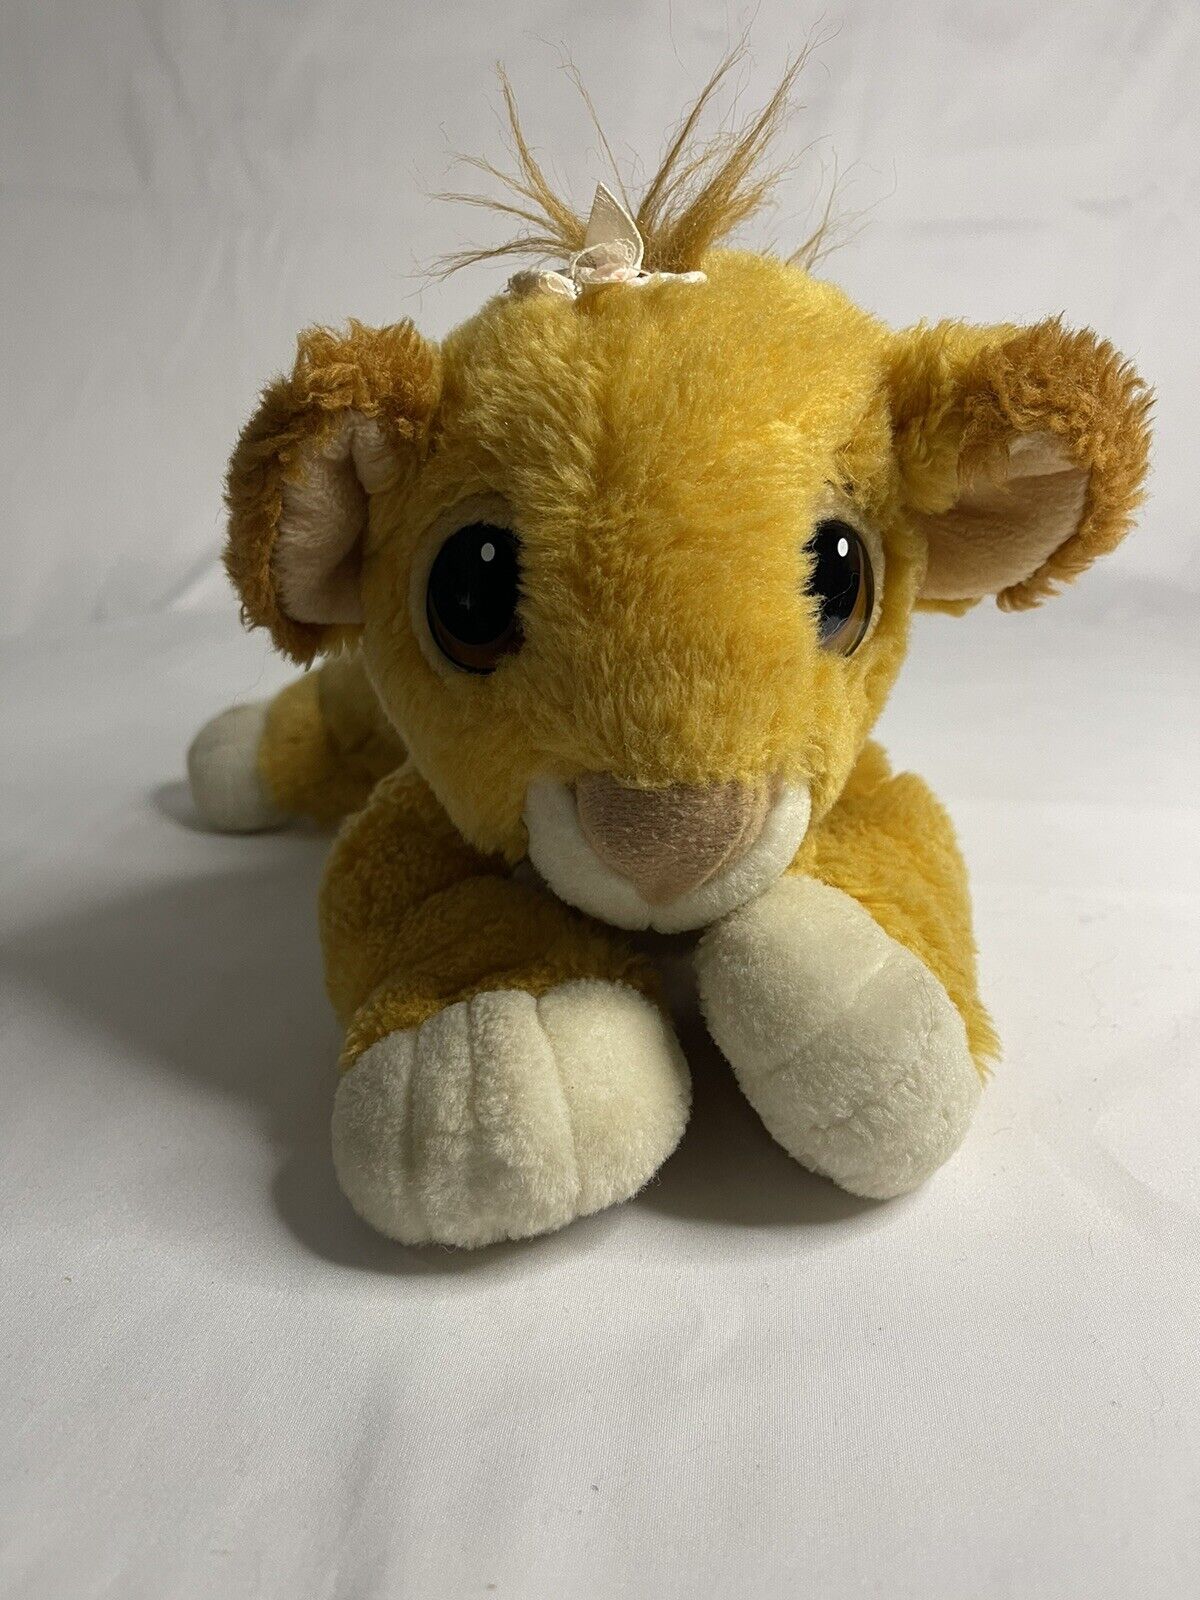 Vintage Disney Mattel 1993 The Lion King Floppy Baby Simba Plush Stuffed Animal